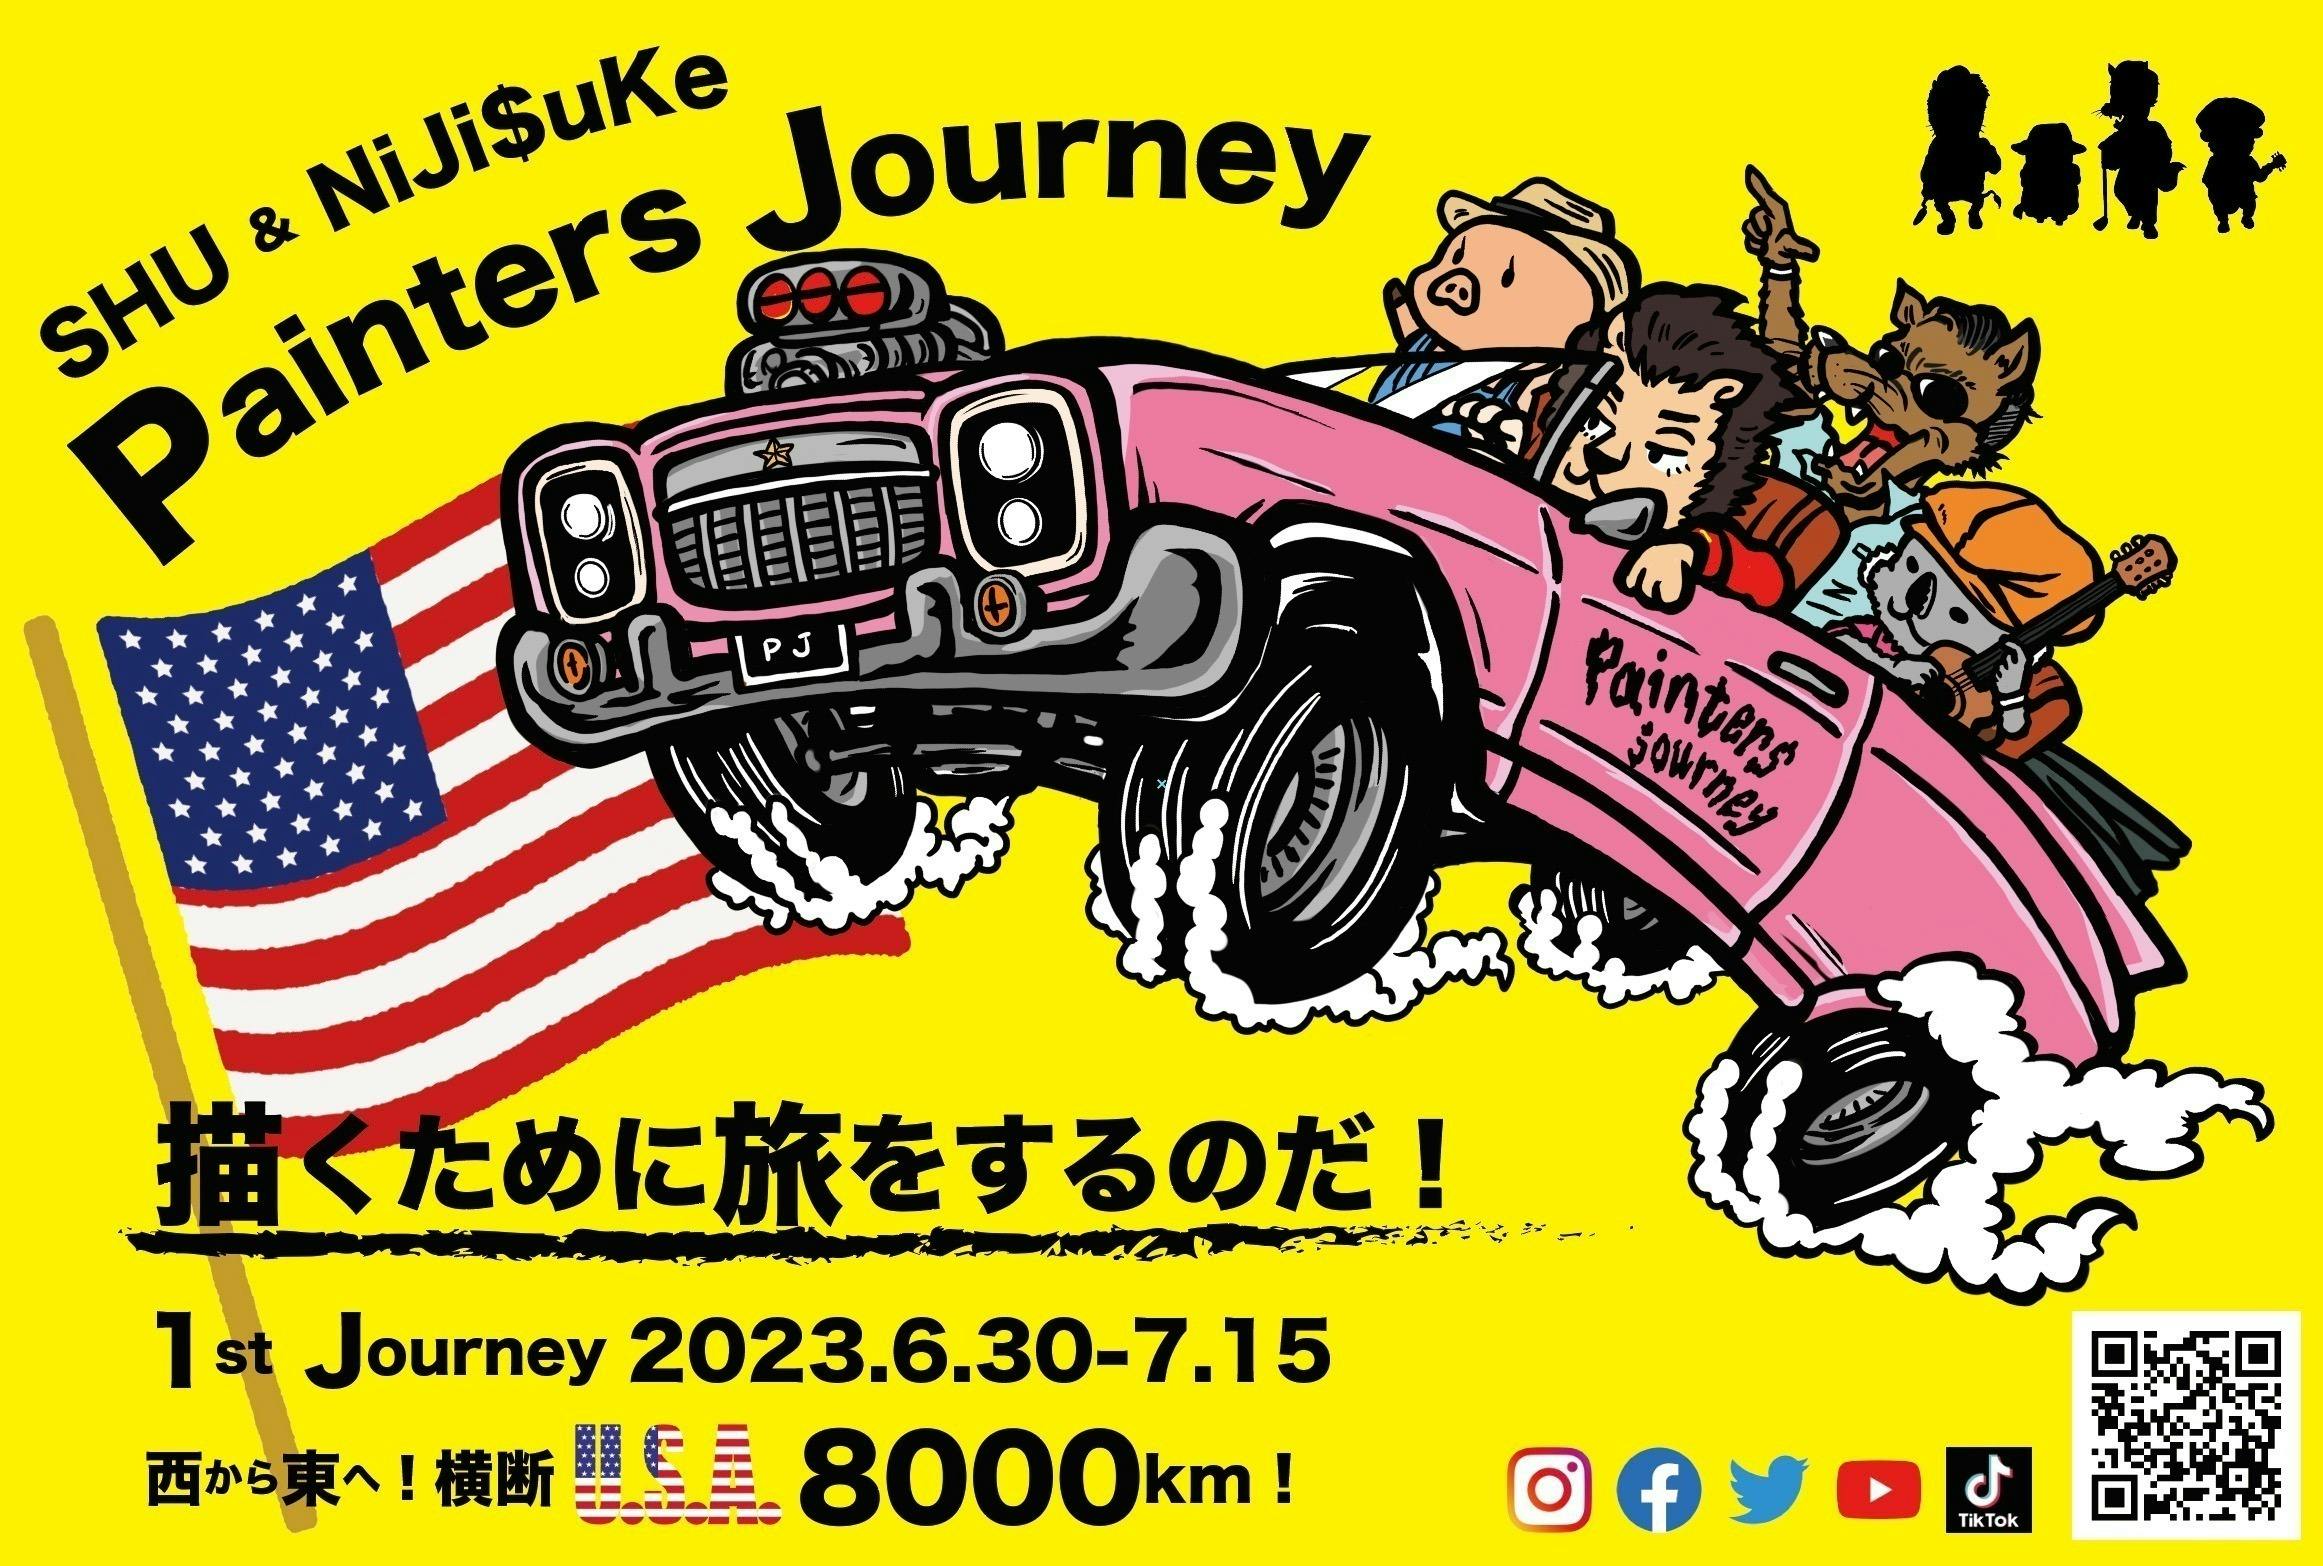 SHU u0026 NiJi$uKe Painters Journey』 - CAMPFIRE (キャンプファイヤー)